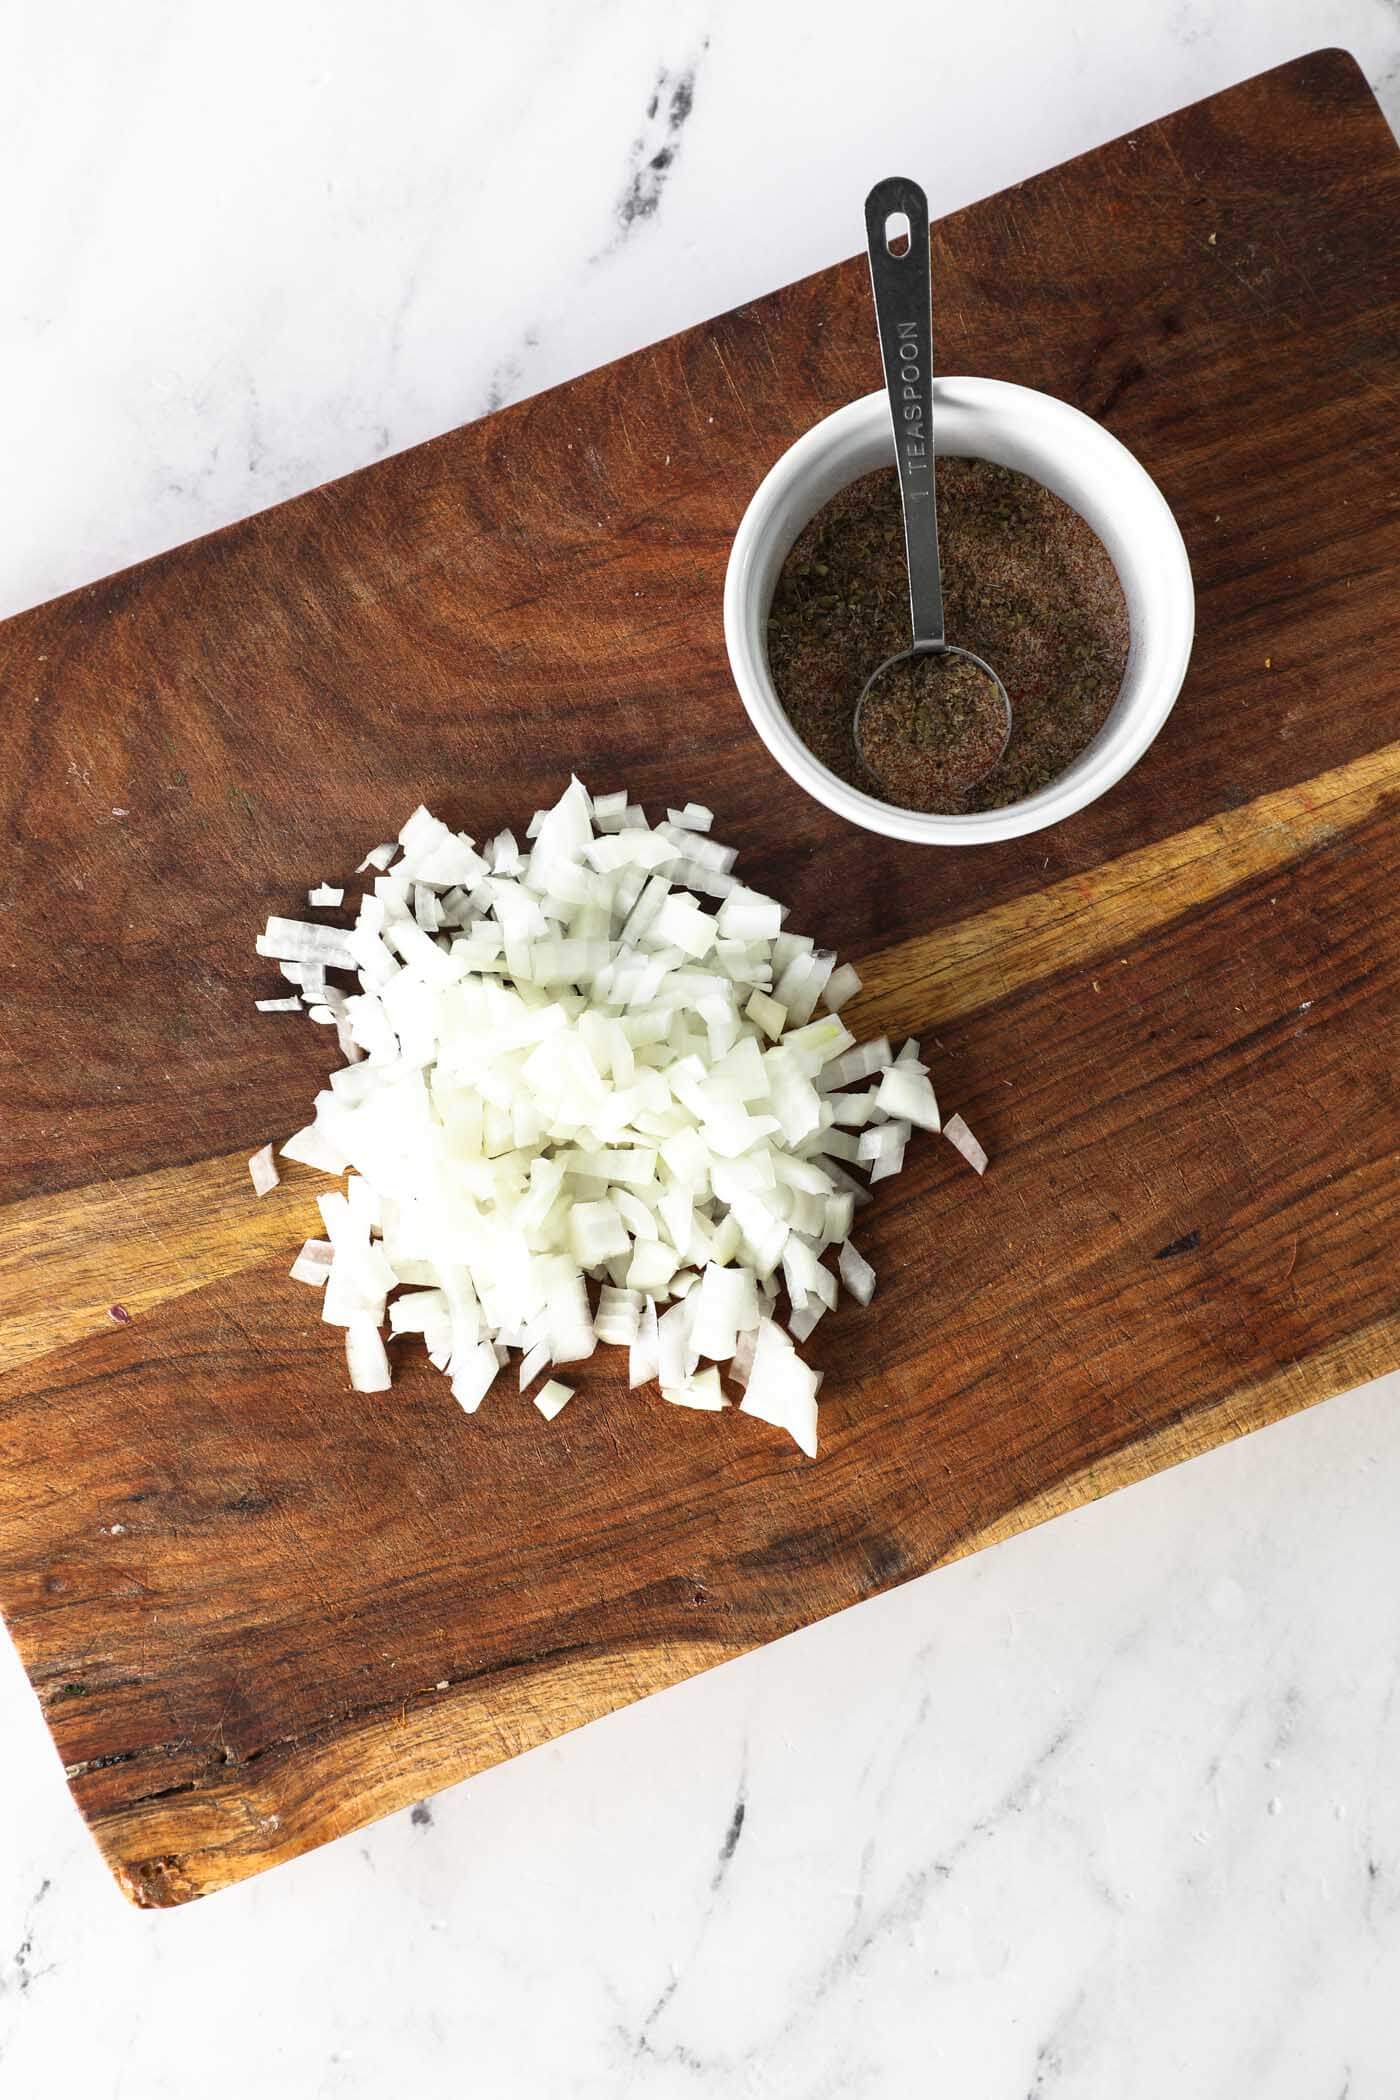 Overhead image of chopped onion on a cutting board with a ramekin of seasonings.